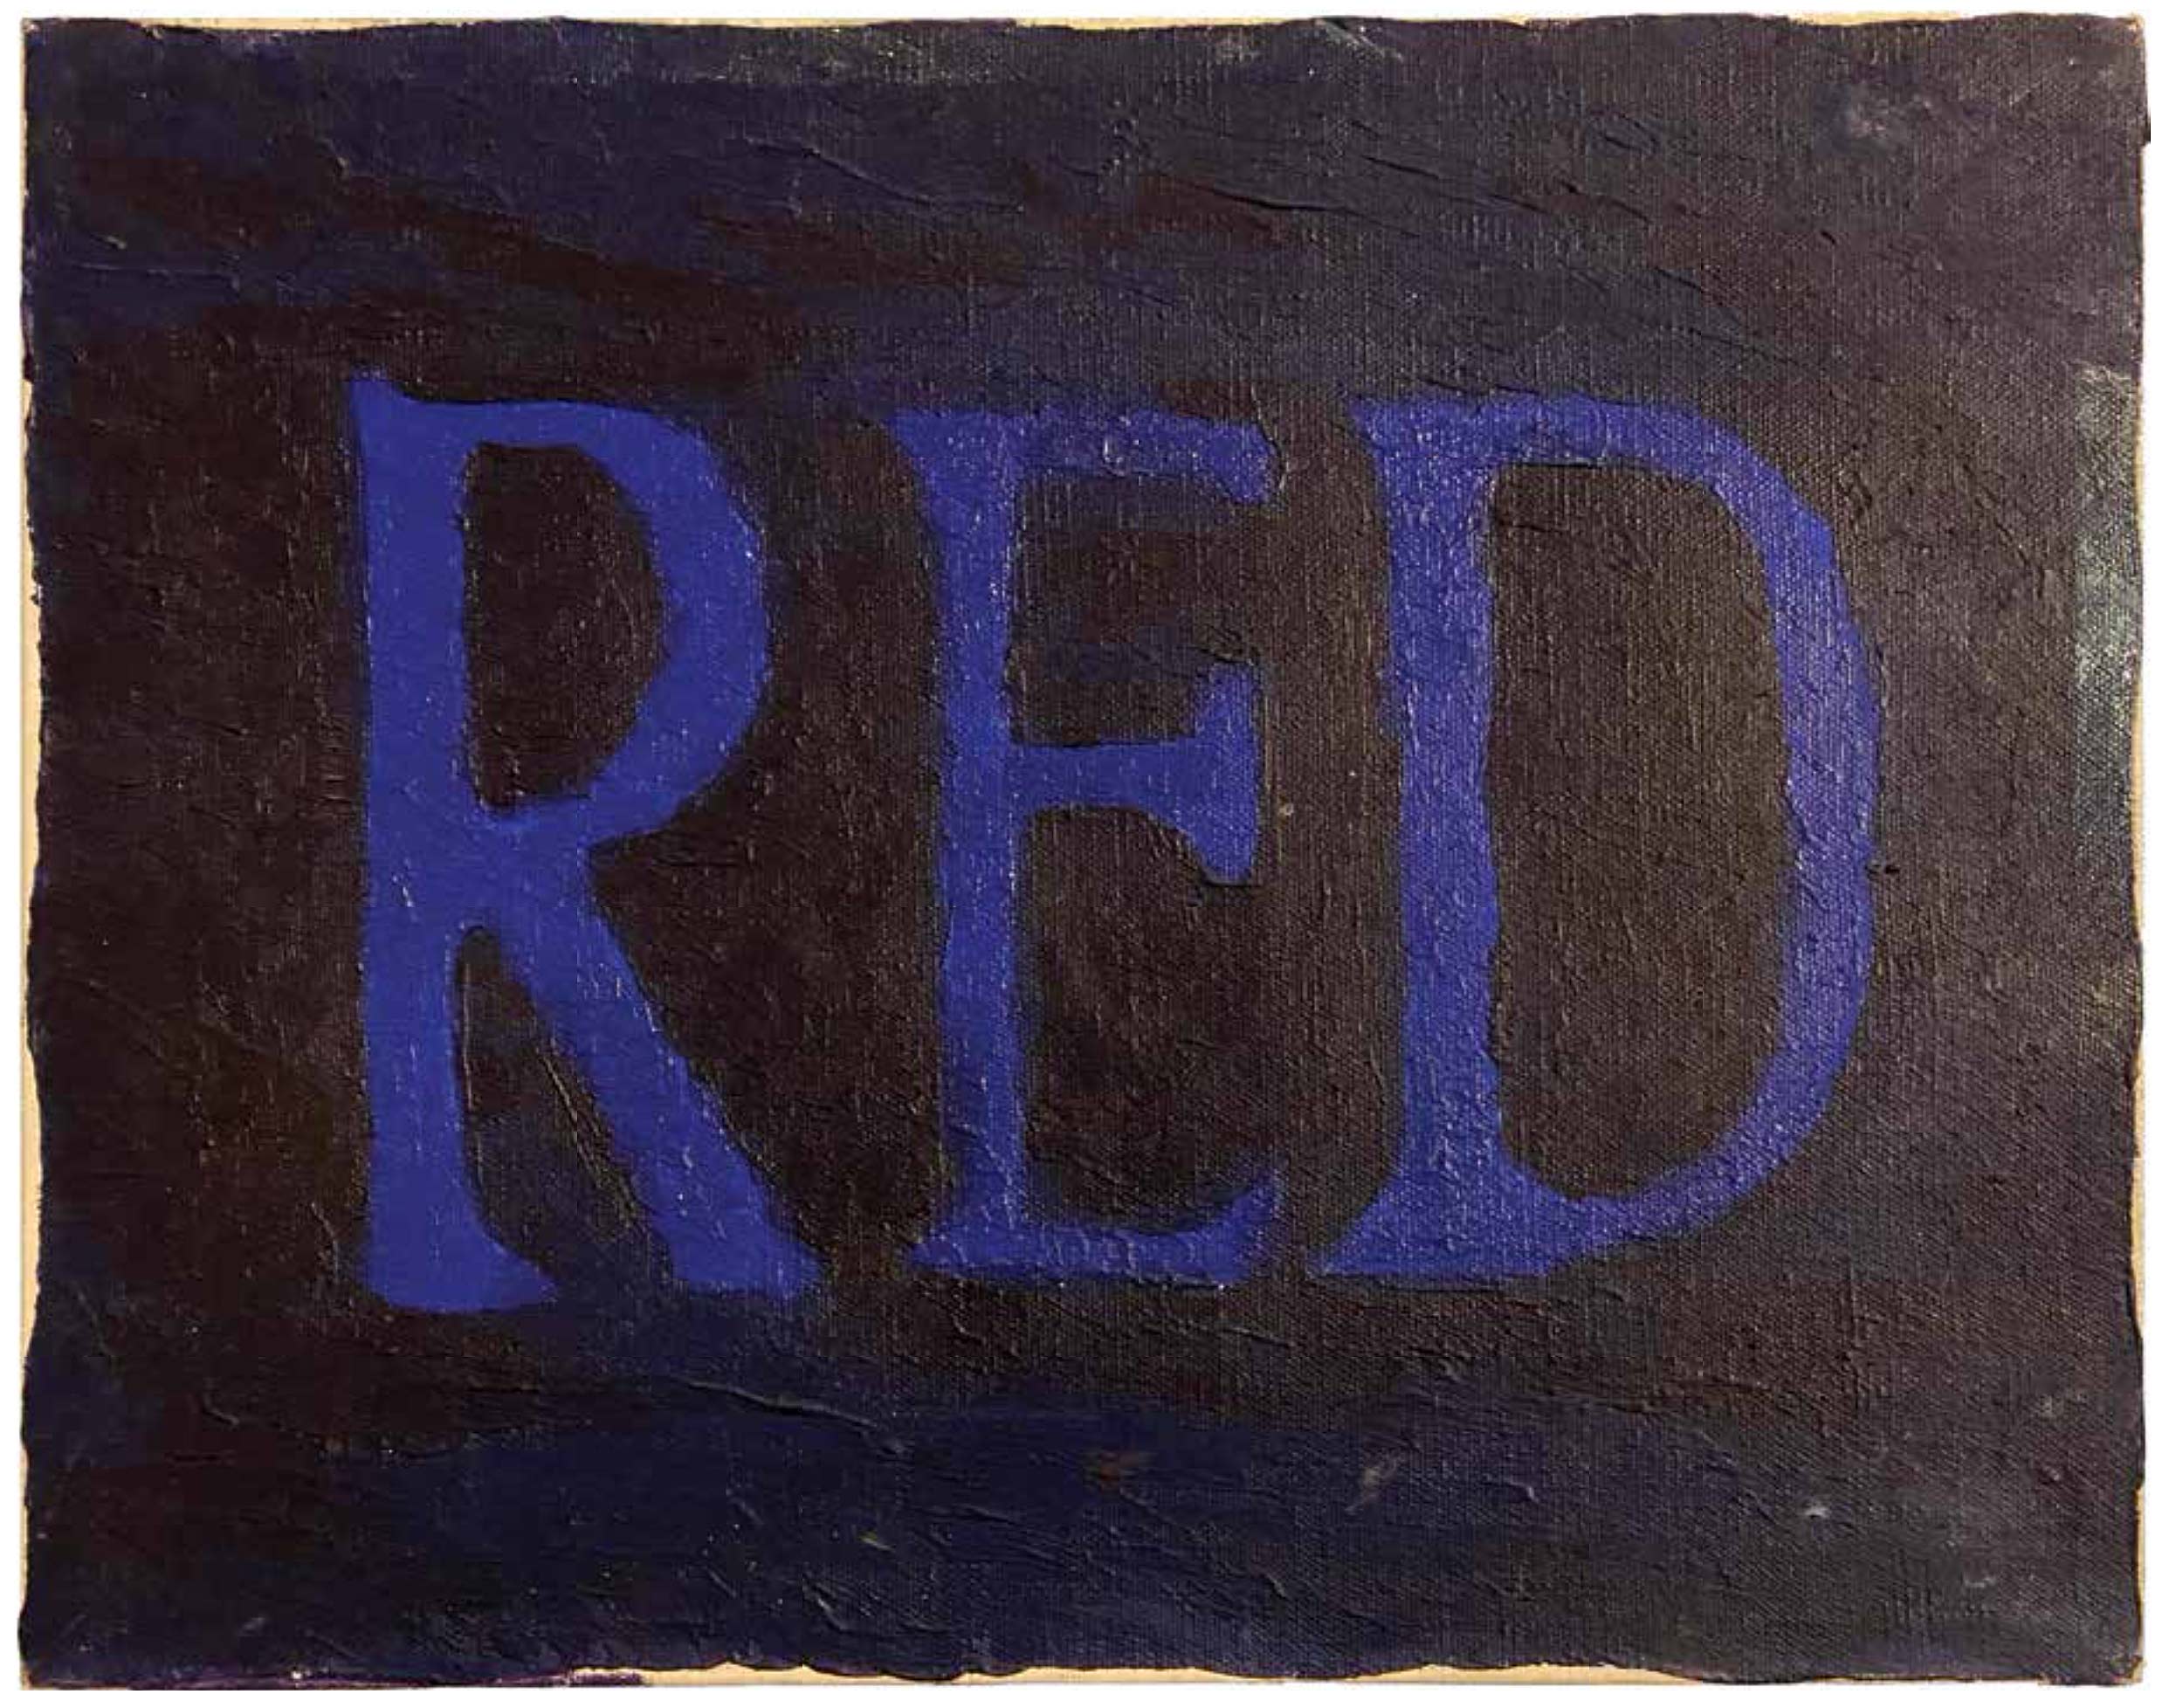 Robert Santoré<br />
"RED" 1967